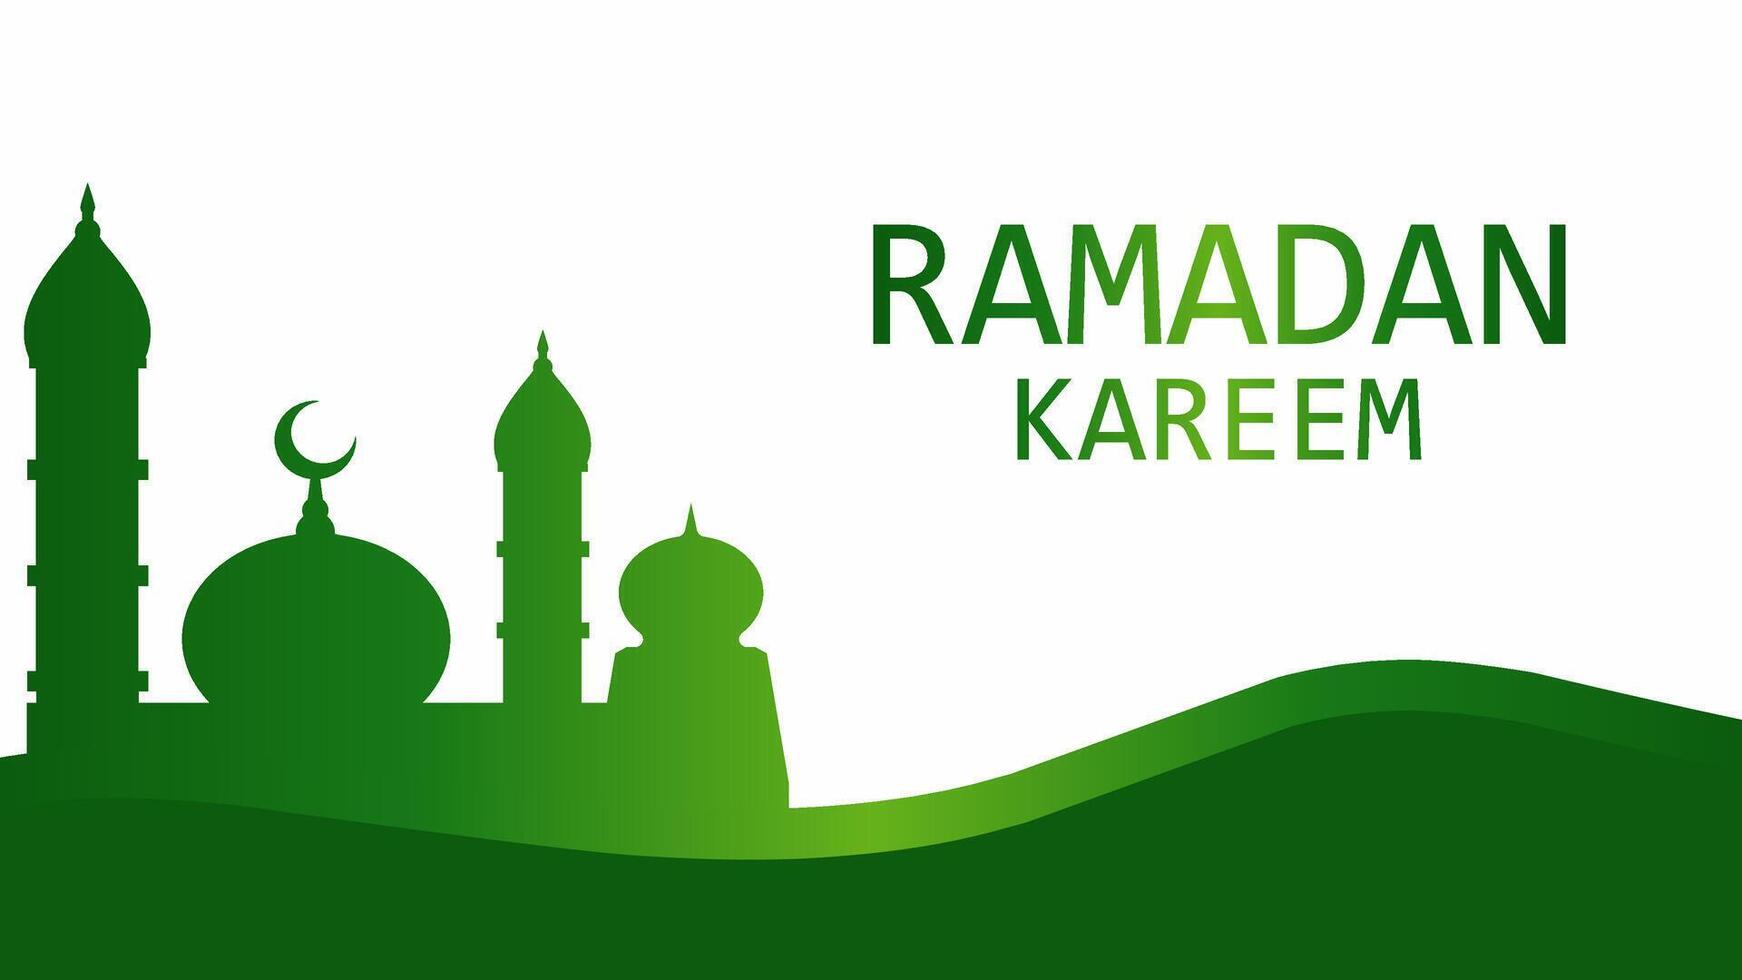 Ramadan Veranstaltung Gruß Vektor Hintergrund. Islam Gruß zum Ramadan Feier oder islamisch Fall. islamisch Hintergrund zum Ramadan, eid, Mubarak und Muslim Kultur